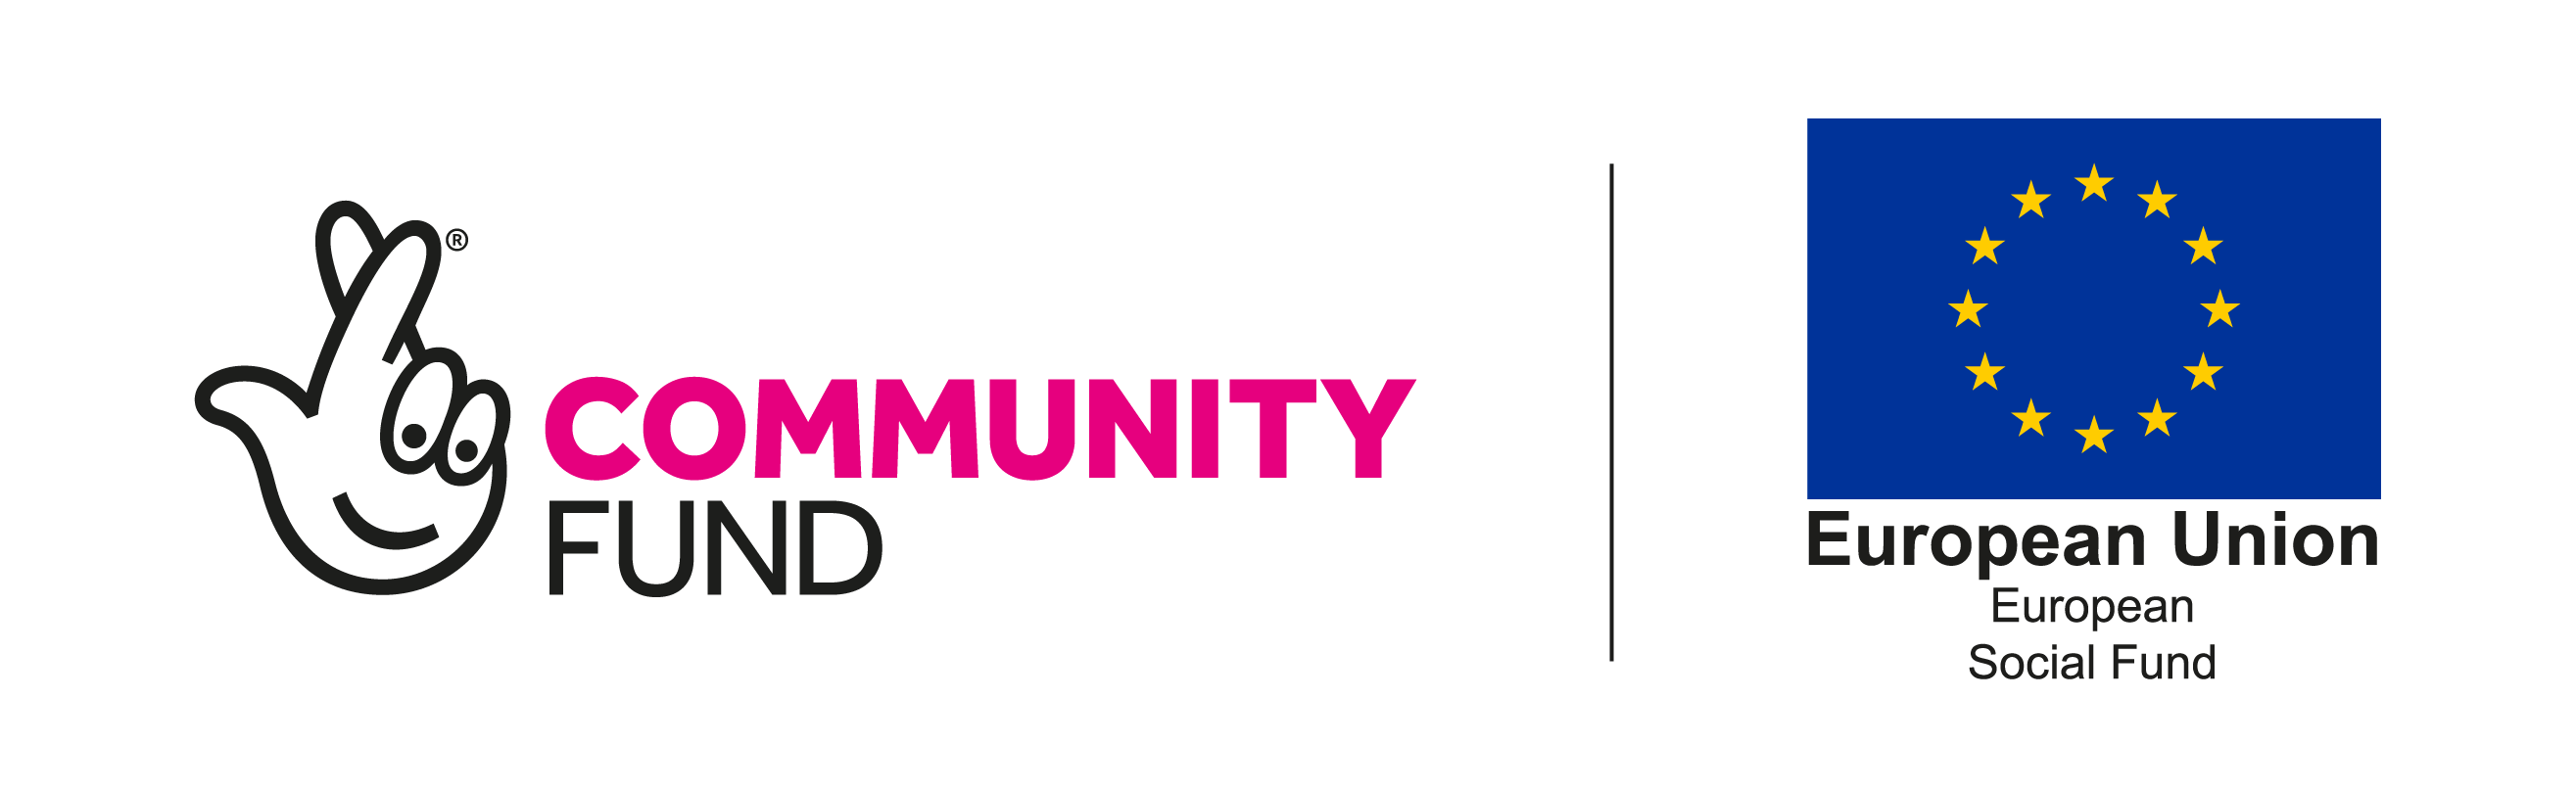 Big Lottery Community Fund logo and European Social Fund Logo